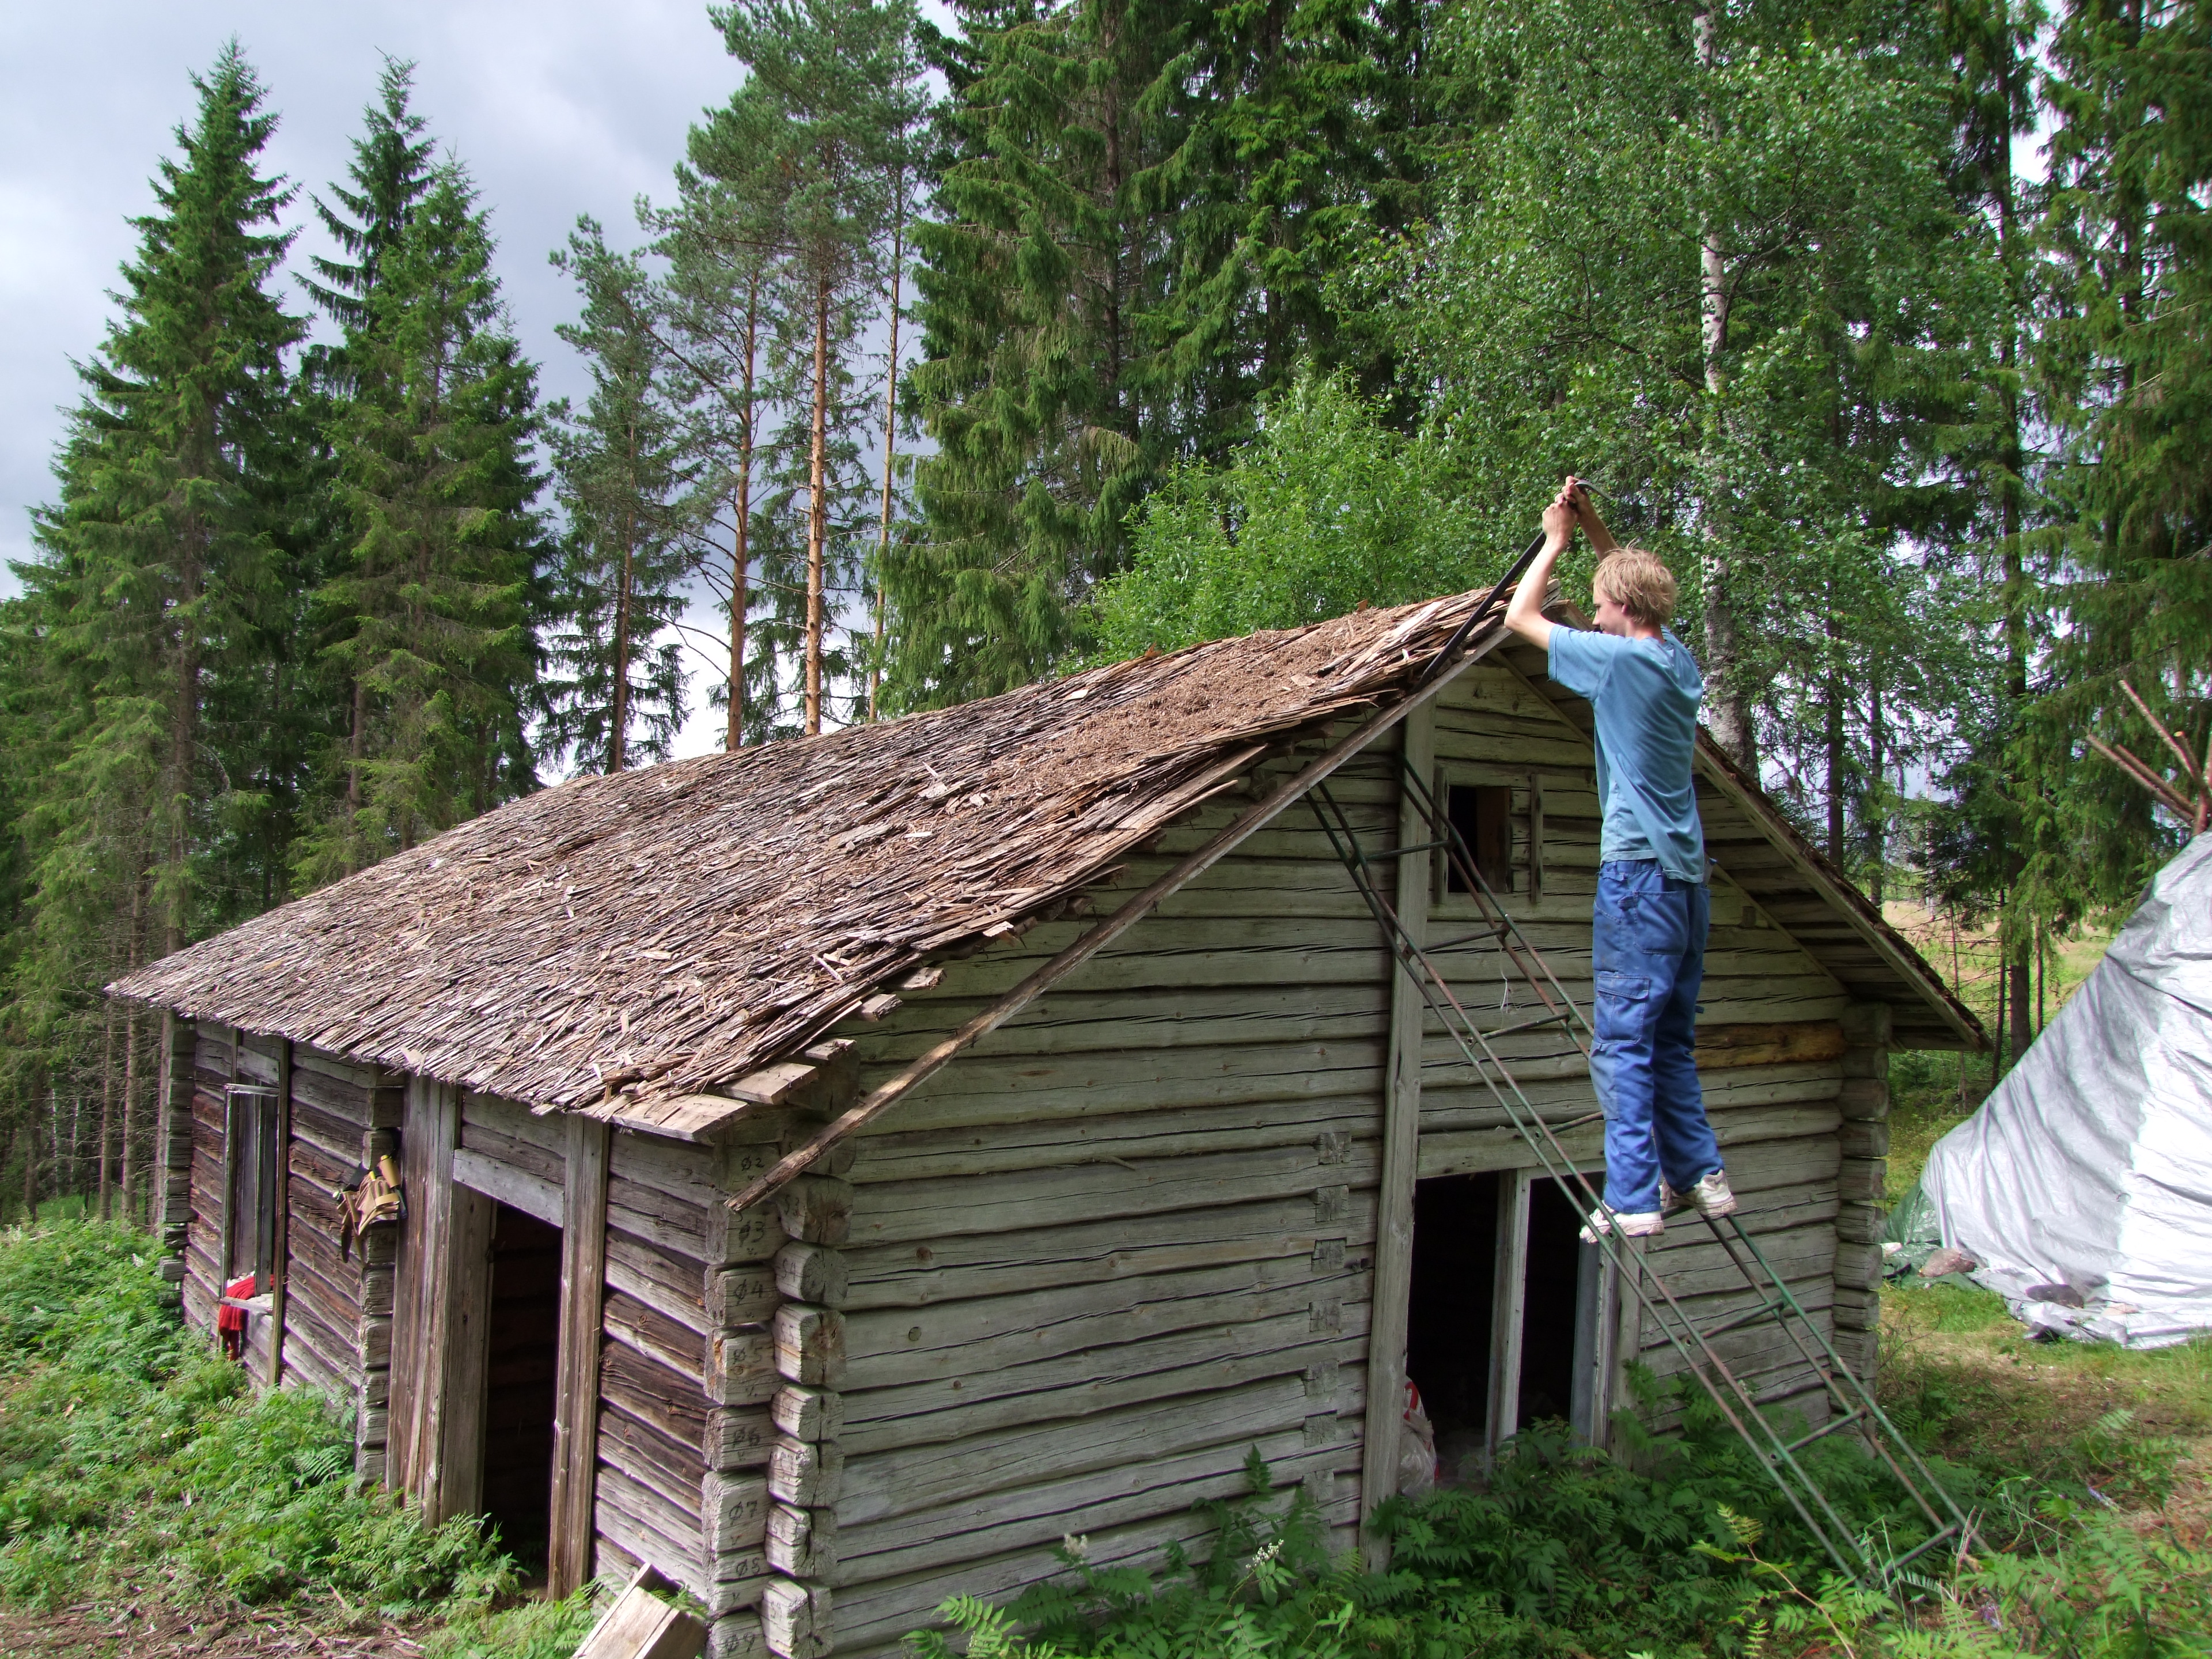 to dismantle the old cabin – Andrea Hejlskov